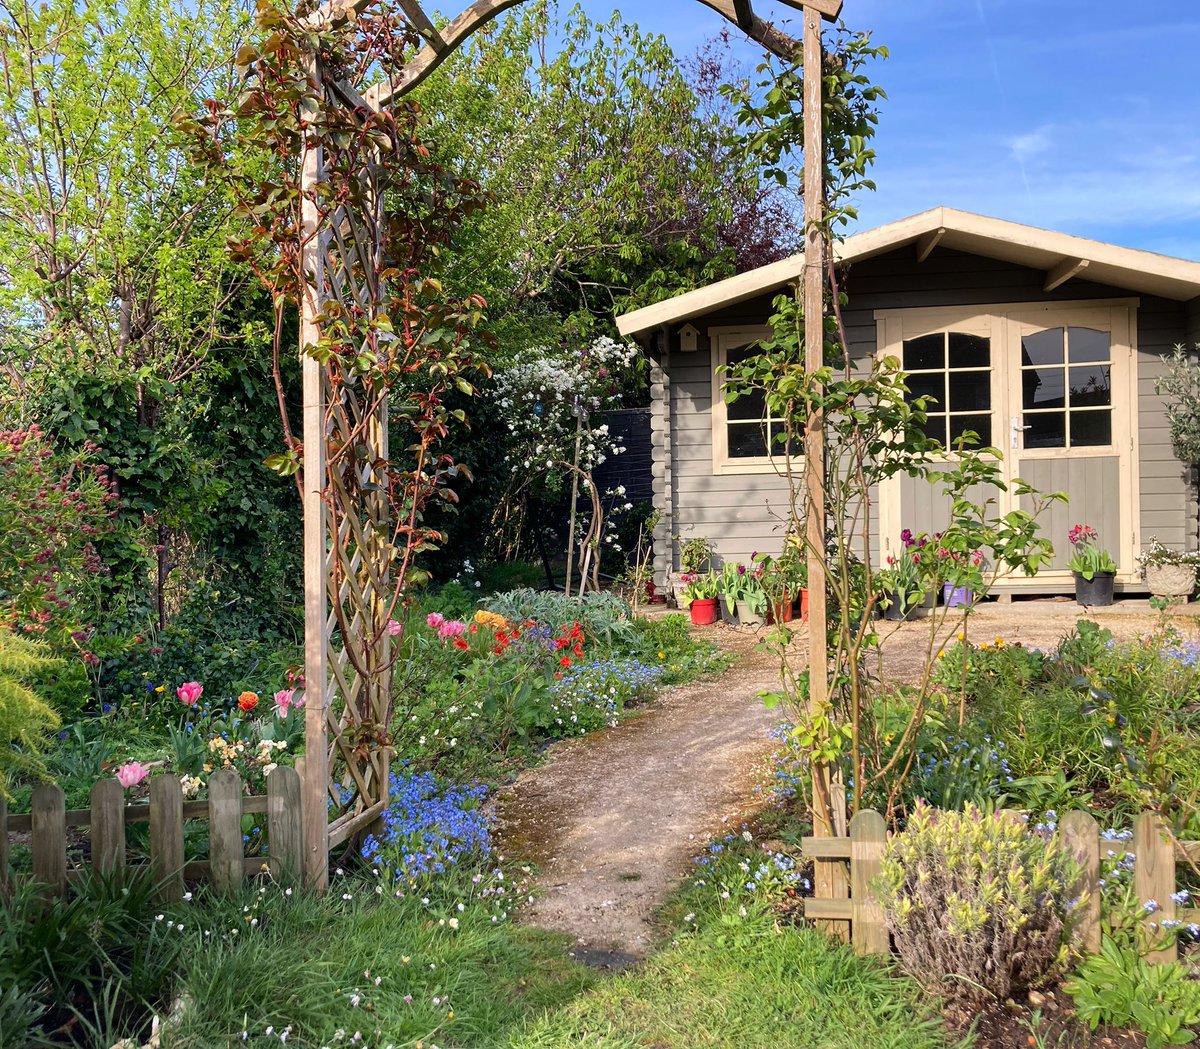 🌈Great to see the Summerhouse Meadow Garden bursting back to life🌈

#nannysgardenworld 

#flowers #garden #springtimegarden #gardening #GardeningTwitter #flowerbeauty